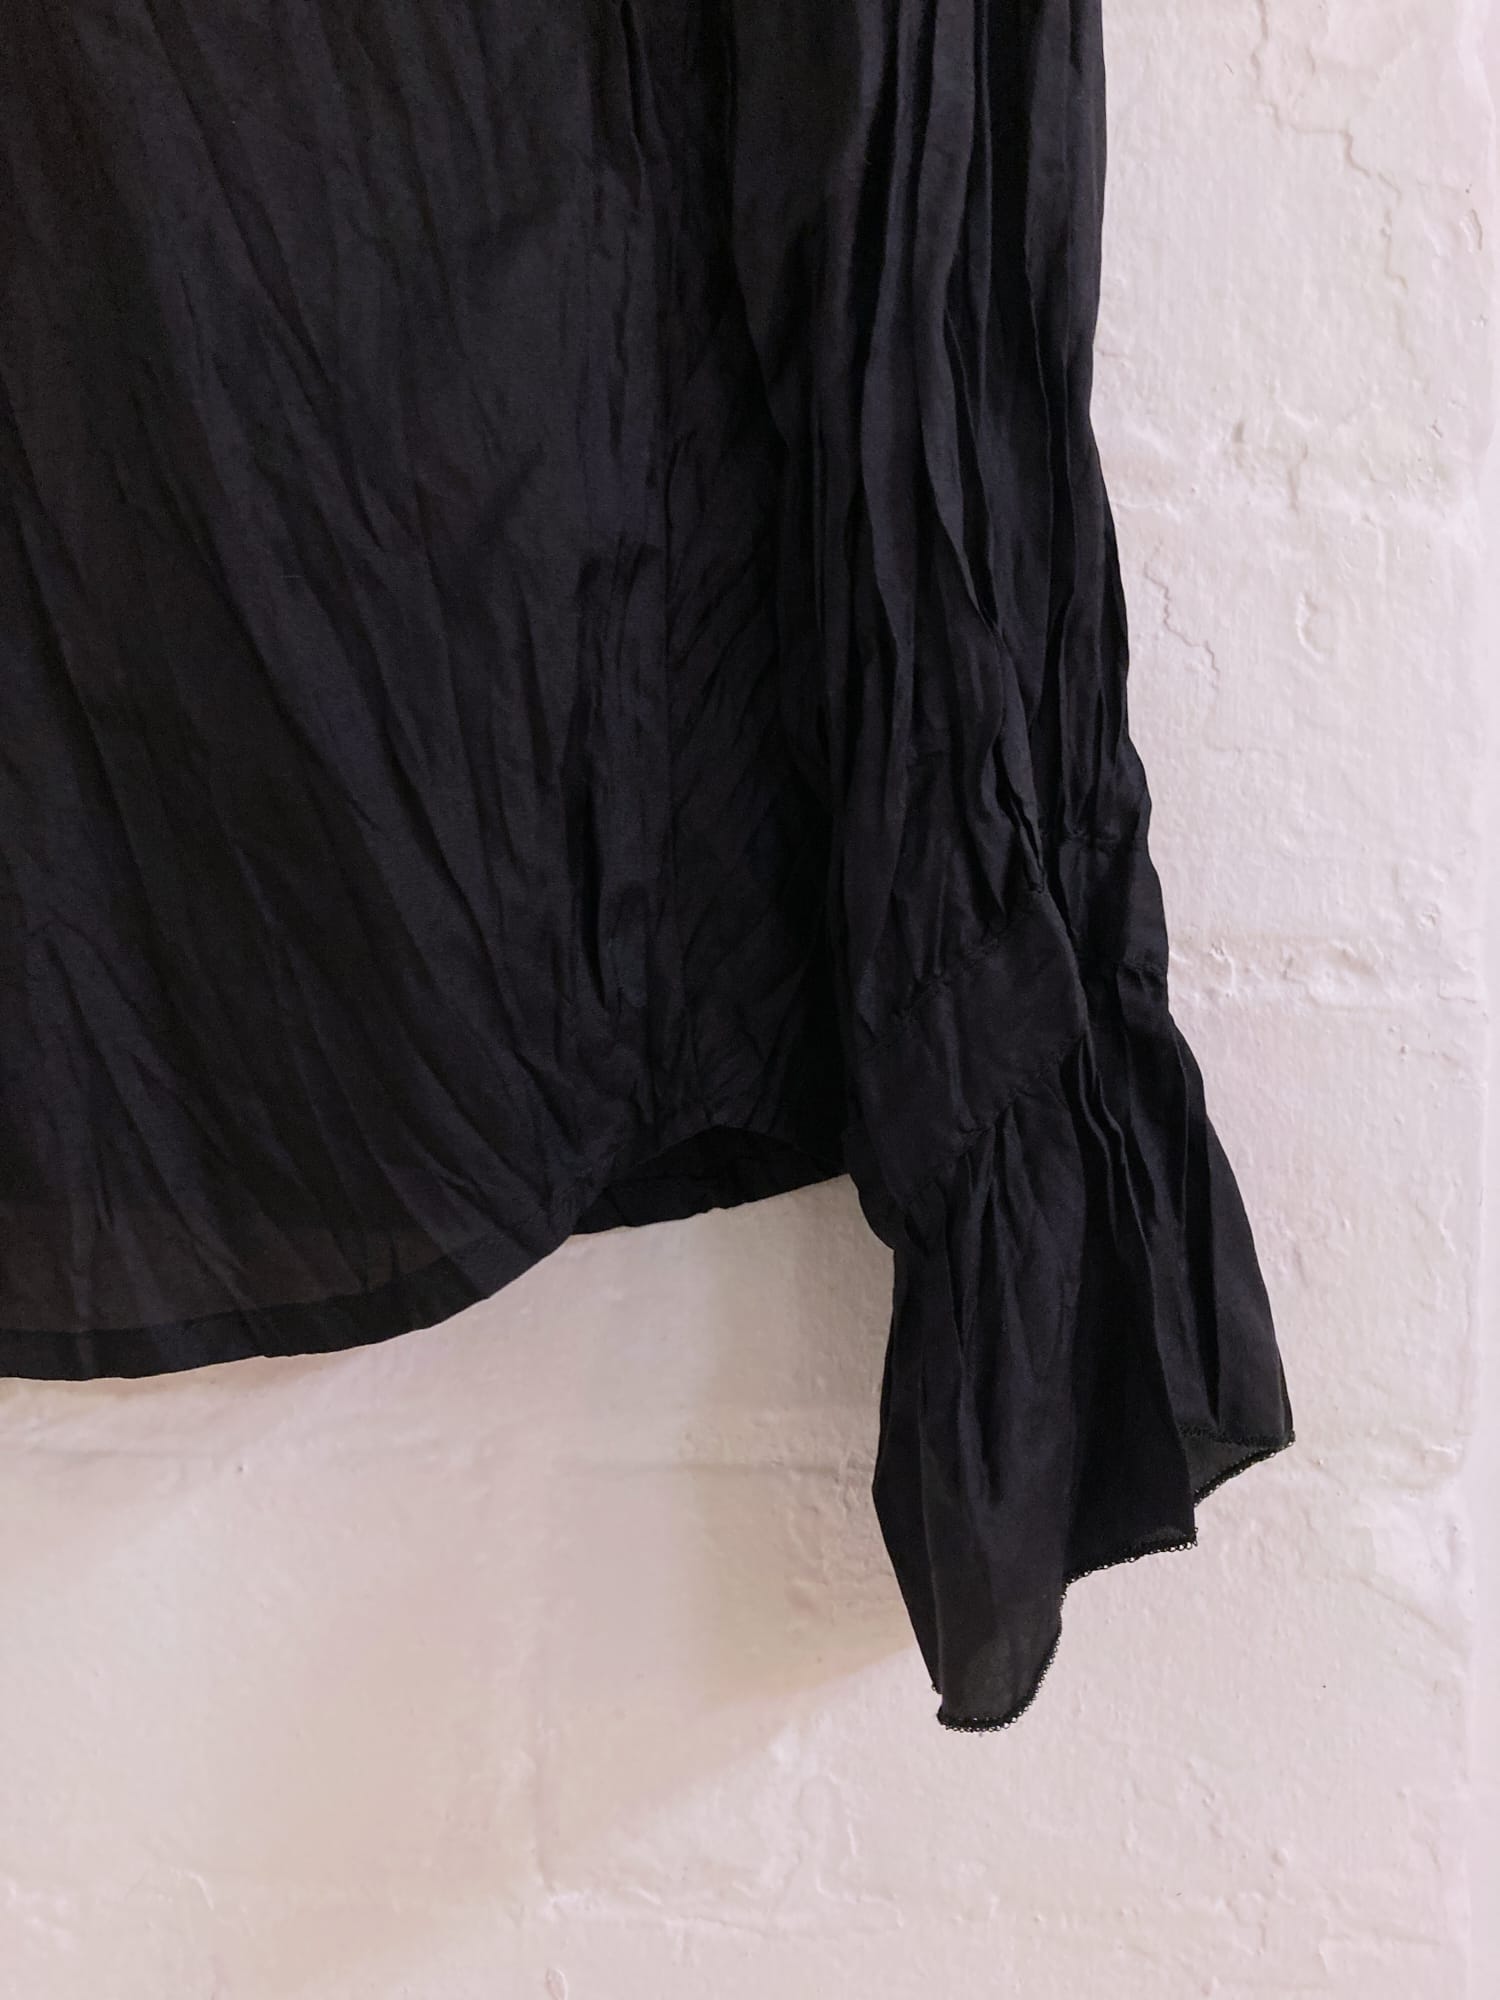 Agnes B Paris 1990s black creased silk shirt with collar ruffle